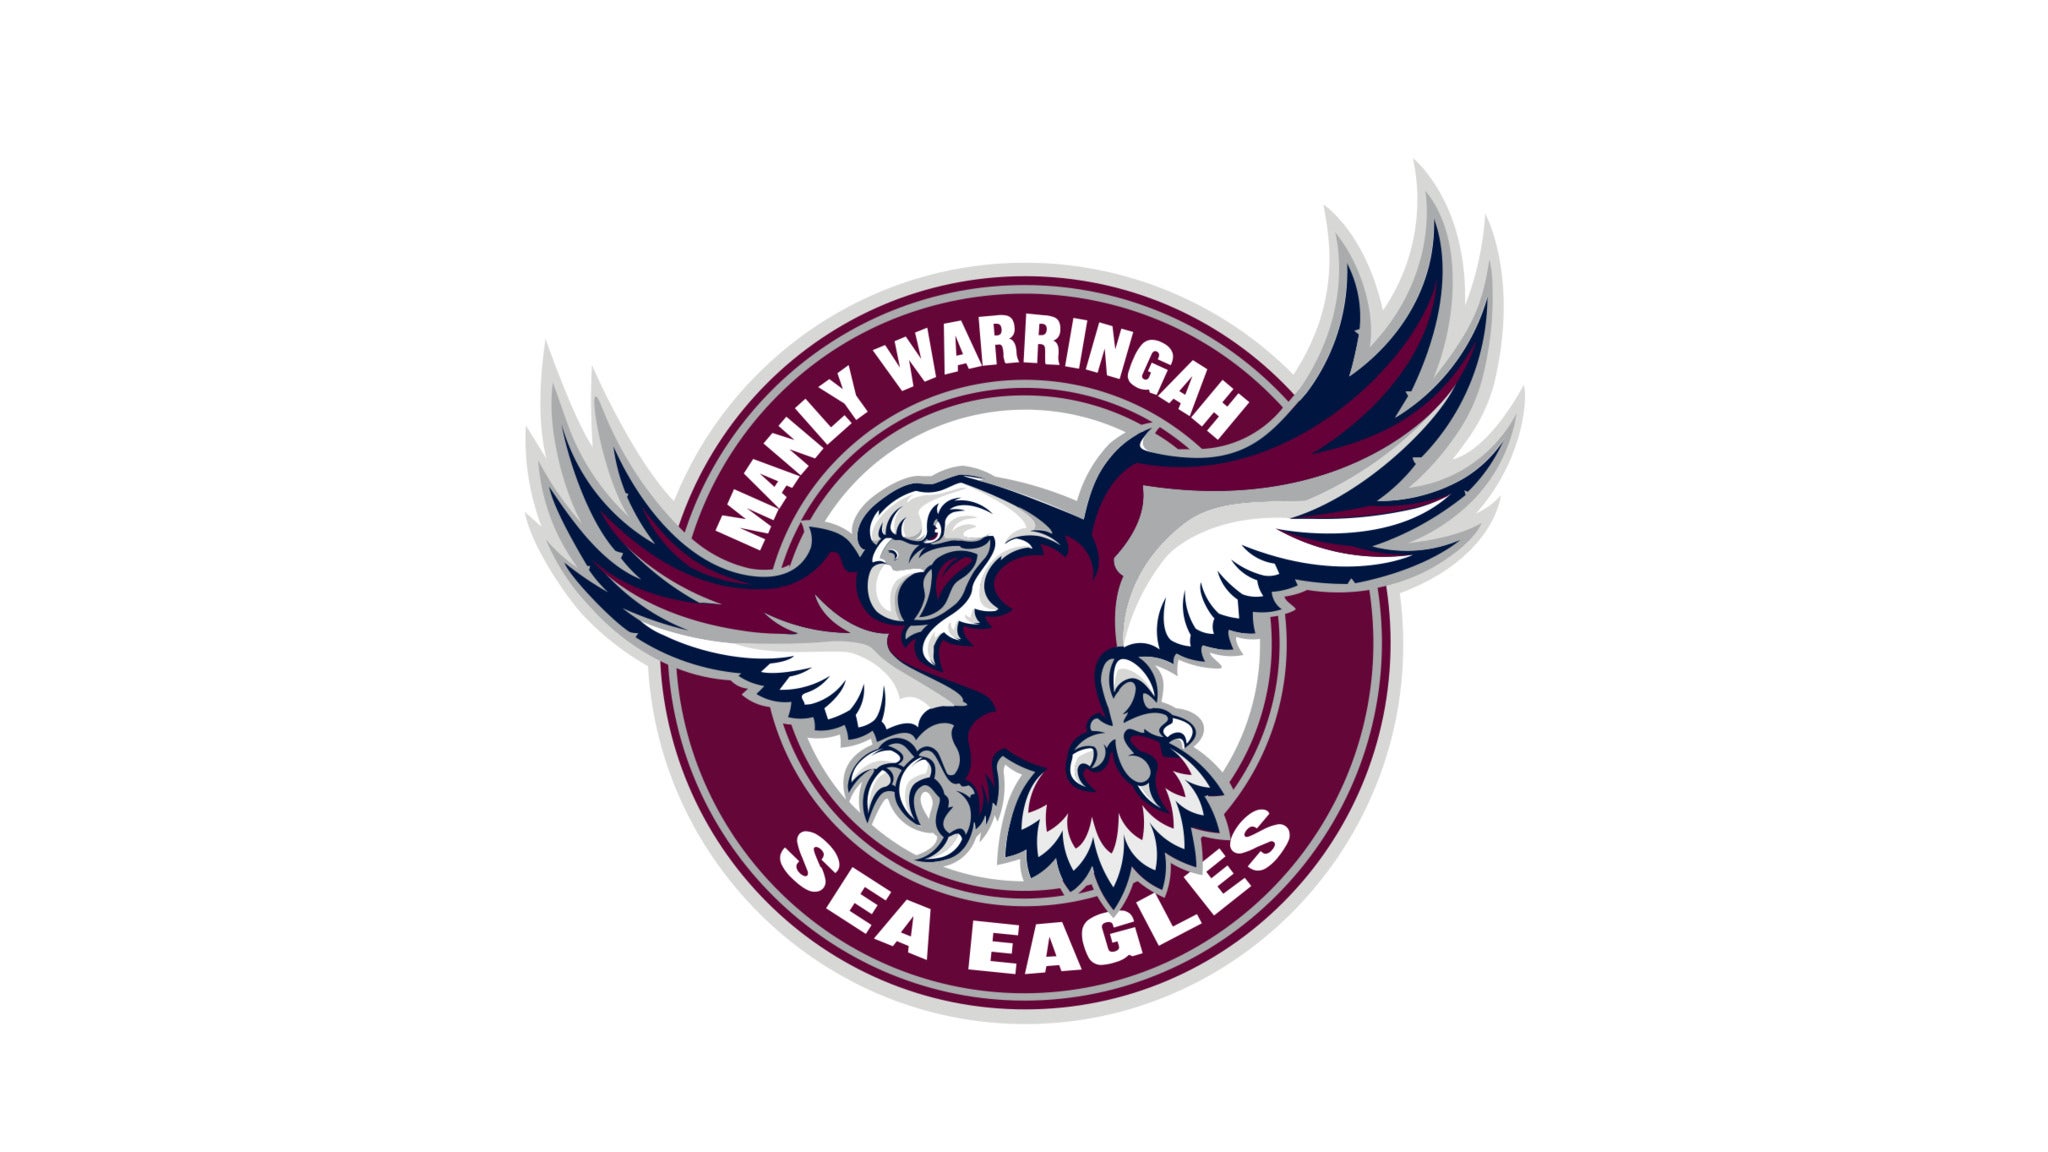 Manly Warringah Sea Eagles presale information on freepresalepasswords.com